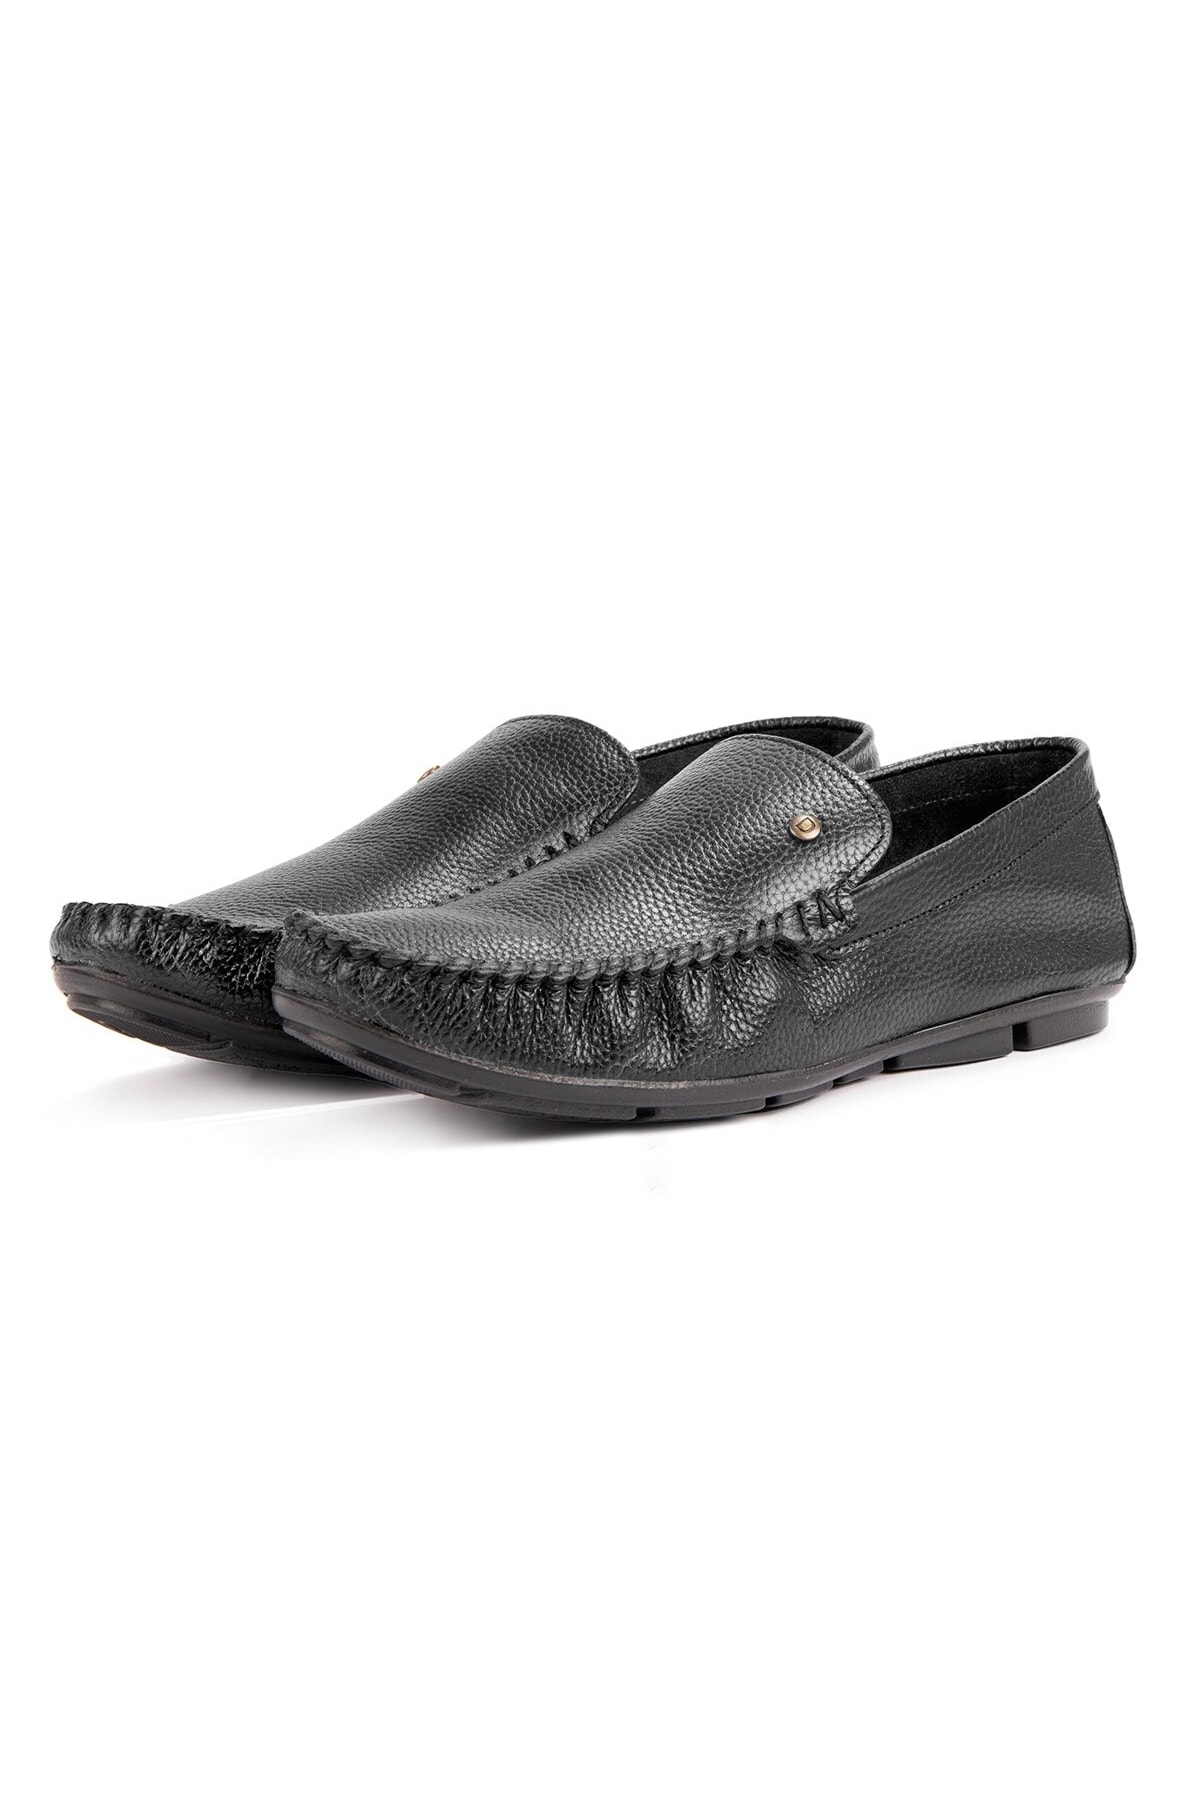 Levně Ducavelli Attic Genuine Leather Men's Casual Shoes, Roque Loafers Black.